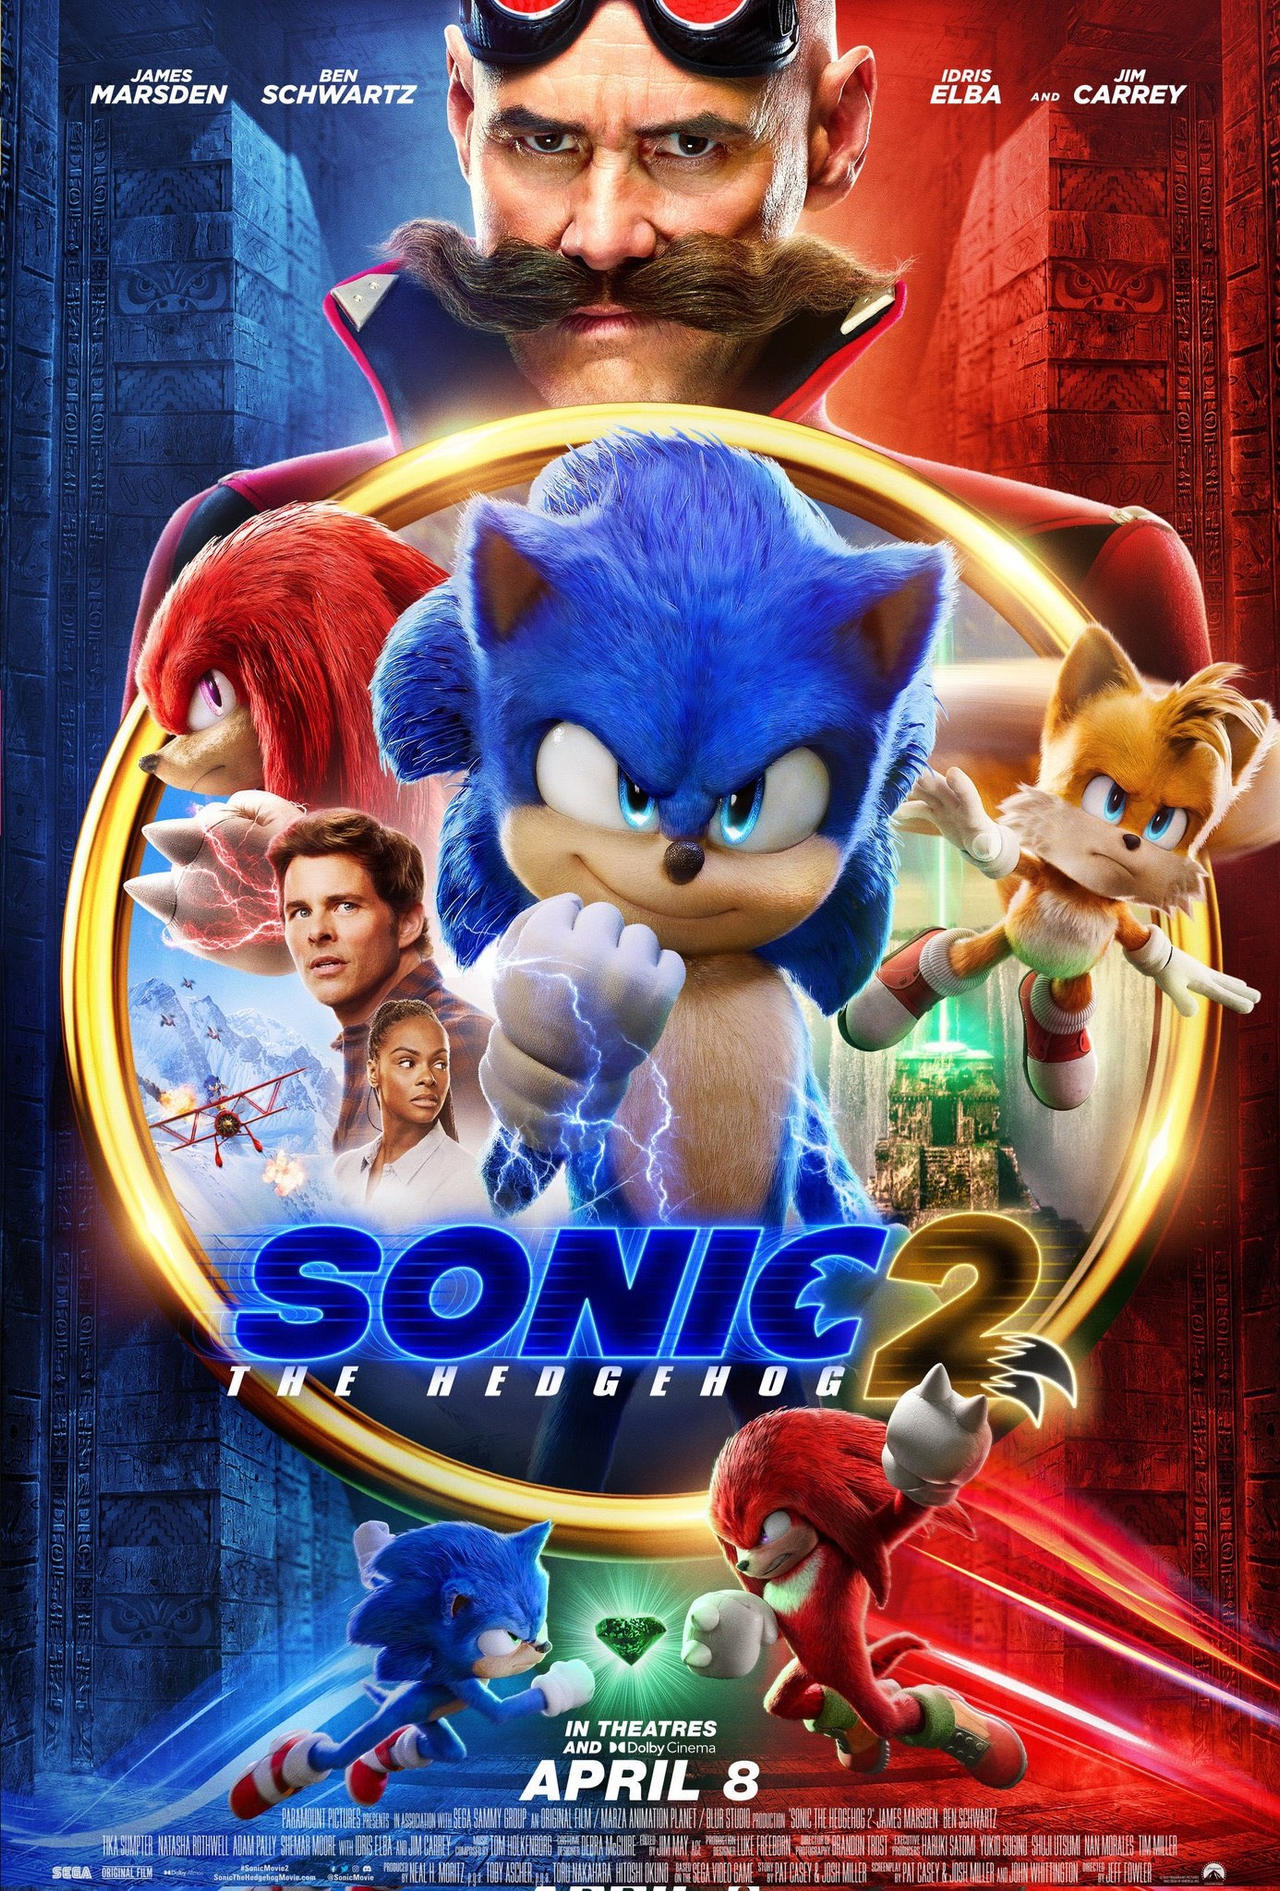 sonic movie 2 fan poster by q2027 -- Fur Affinity [dot] net